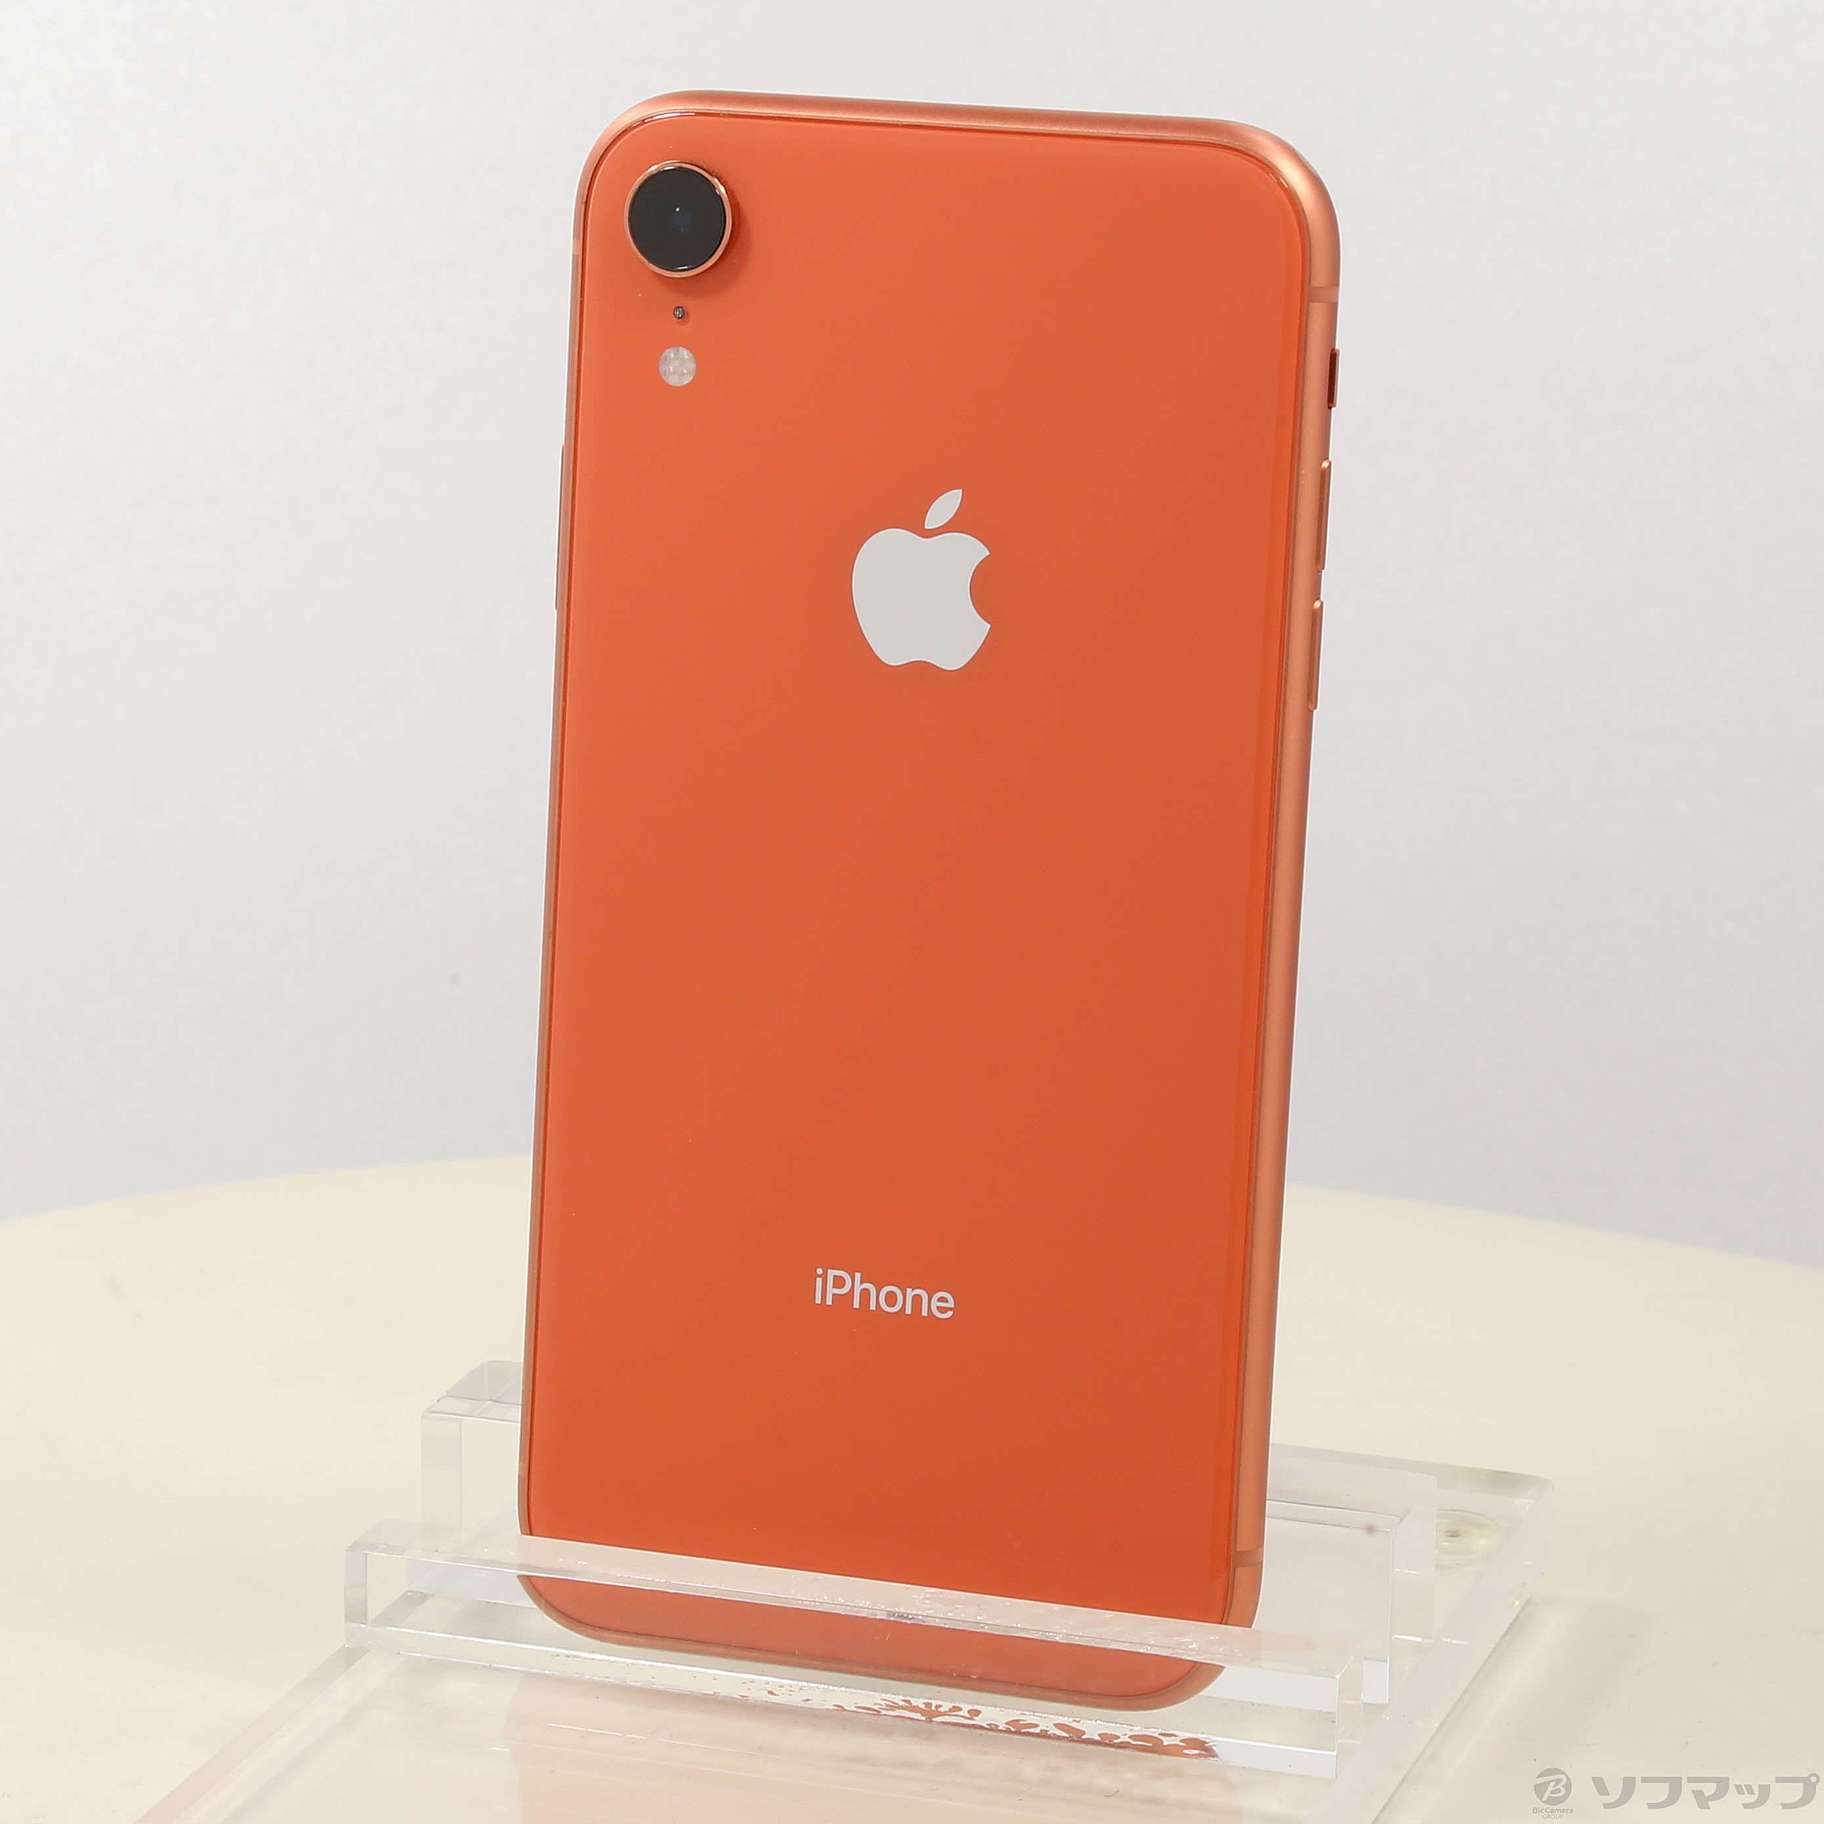 iPhone XR Coral 256 GB - スマートフォン本体